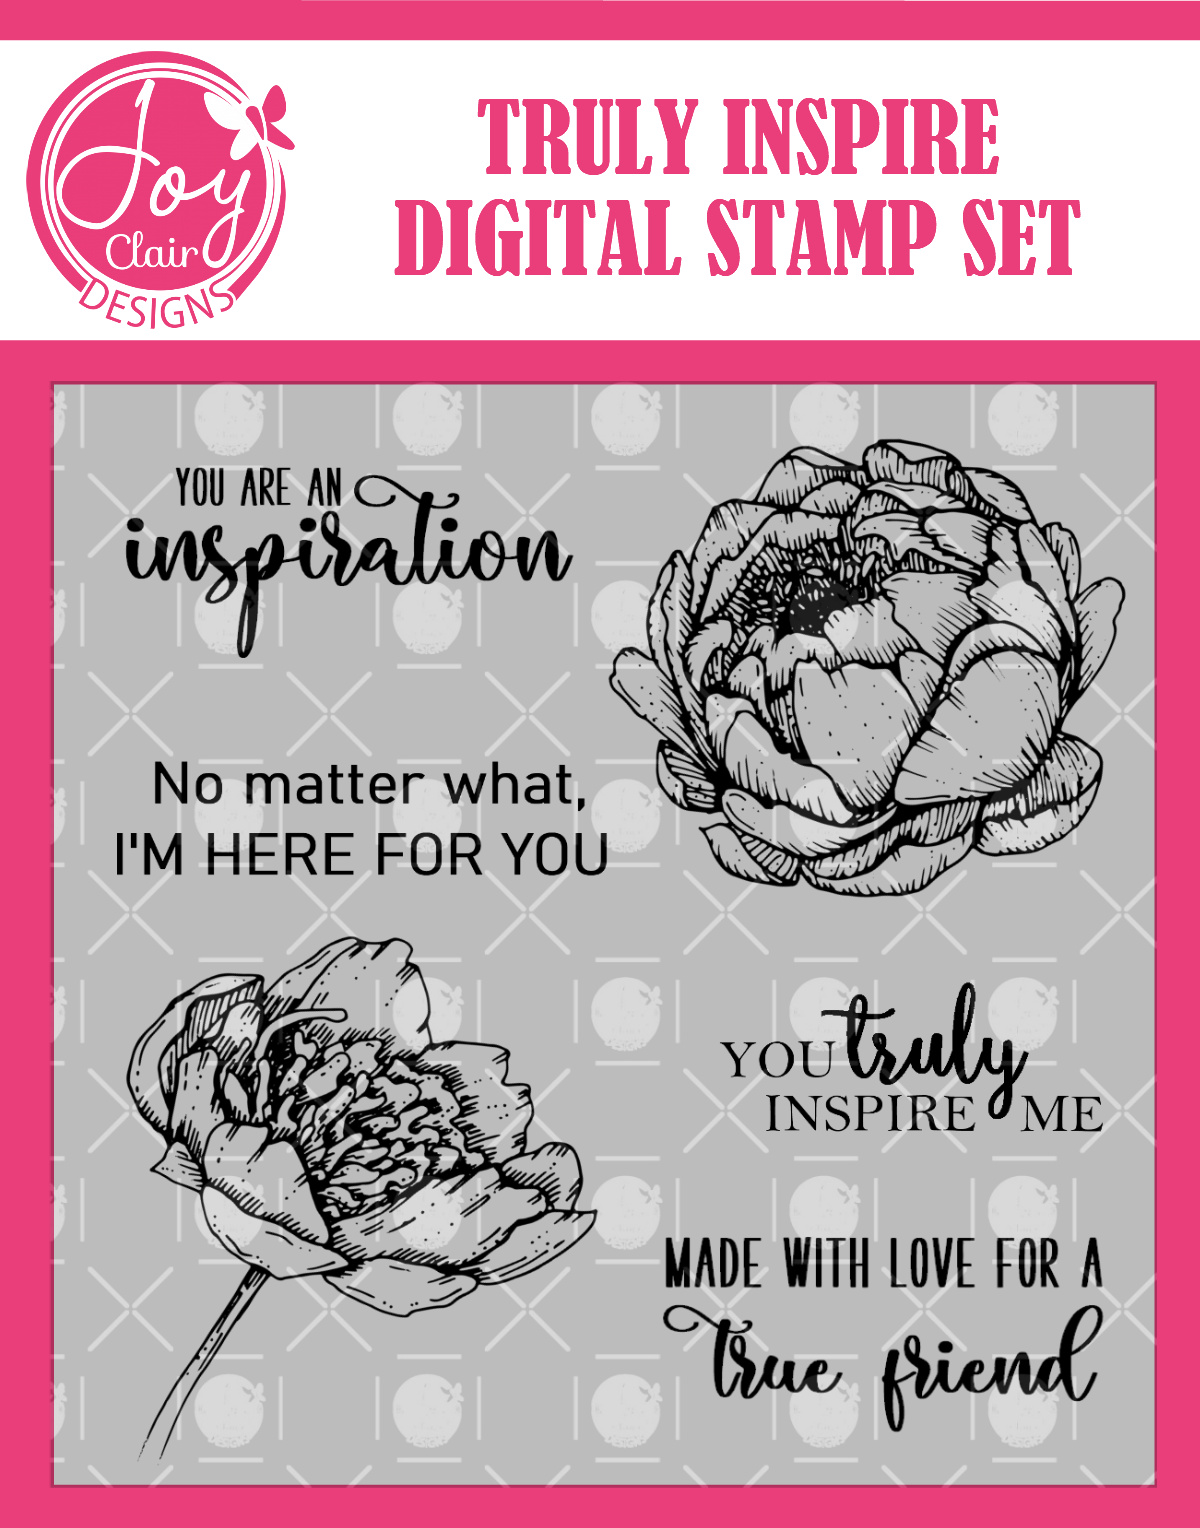 Joy Clair Designs - You Truly Inspire Me Digital Stamp Set